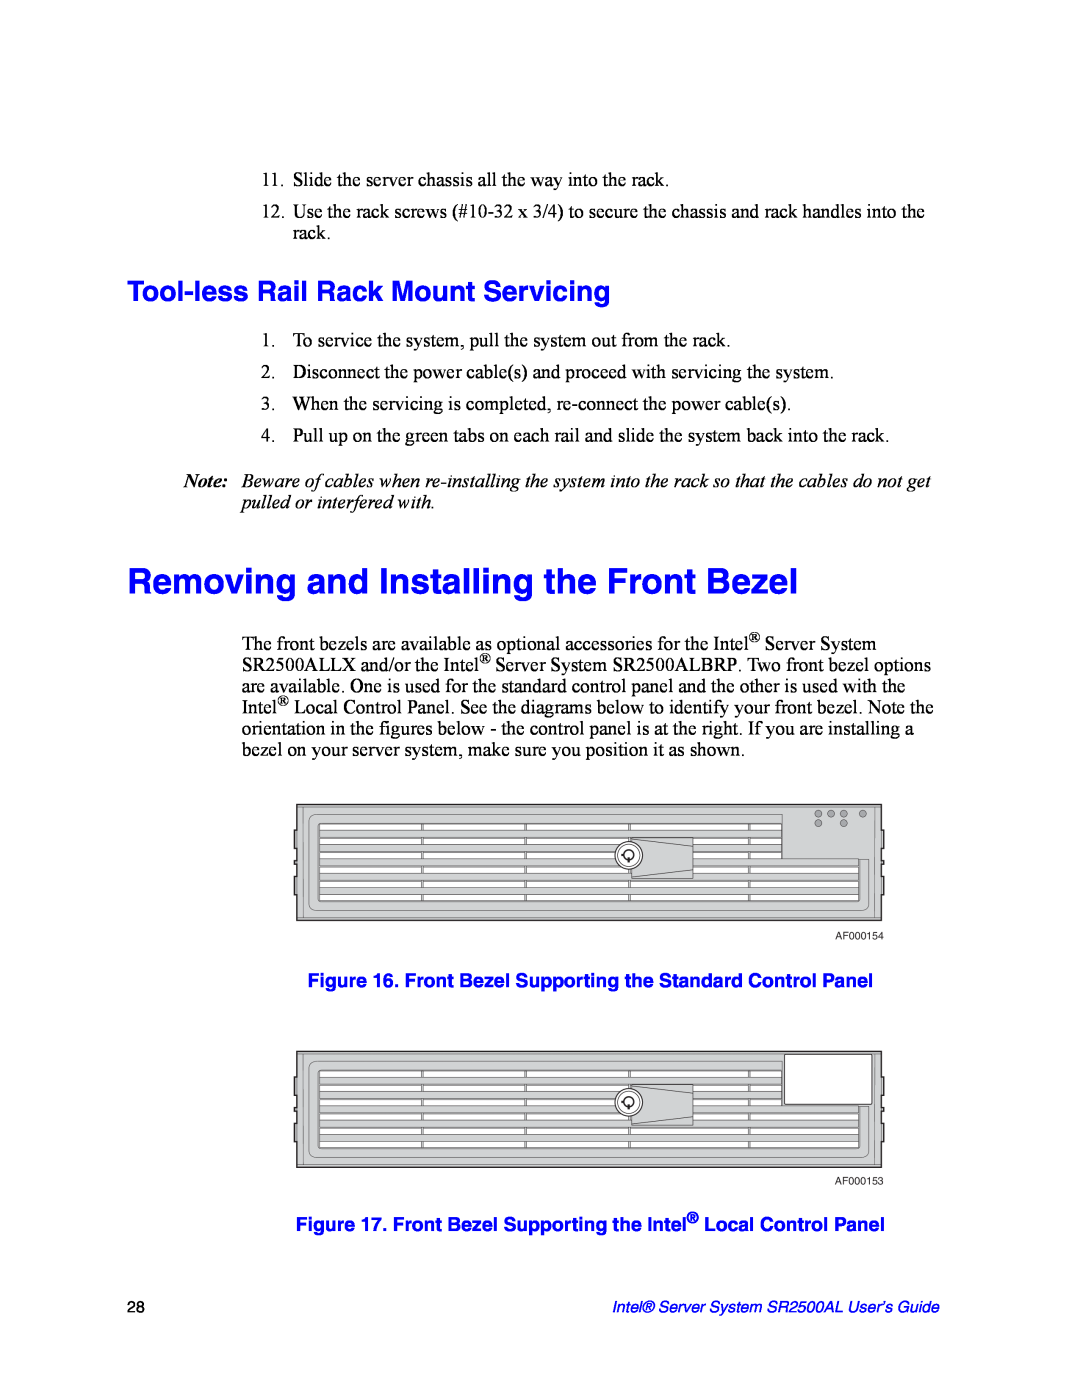 Intel SR2500AL manual Removing and Installing the Front Bezel, Tool-less Rail Rack Mount Servicing 